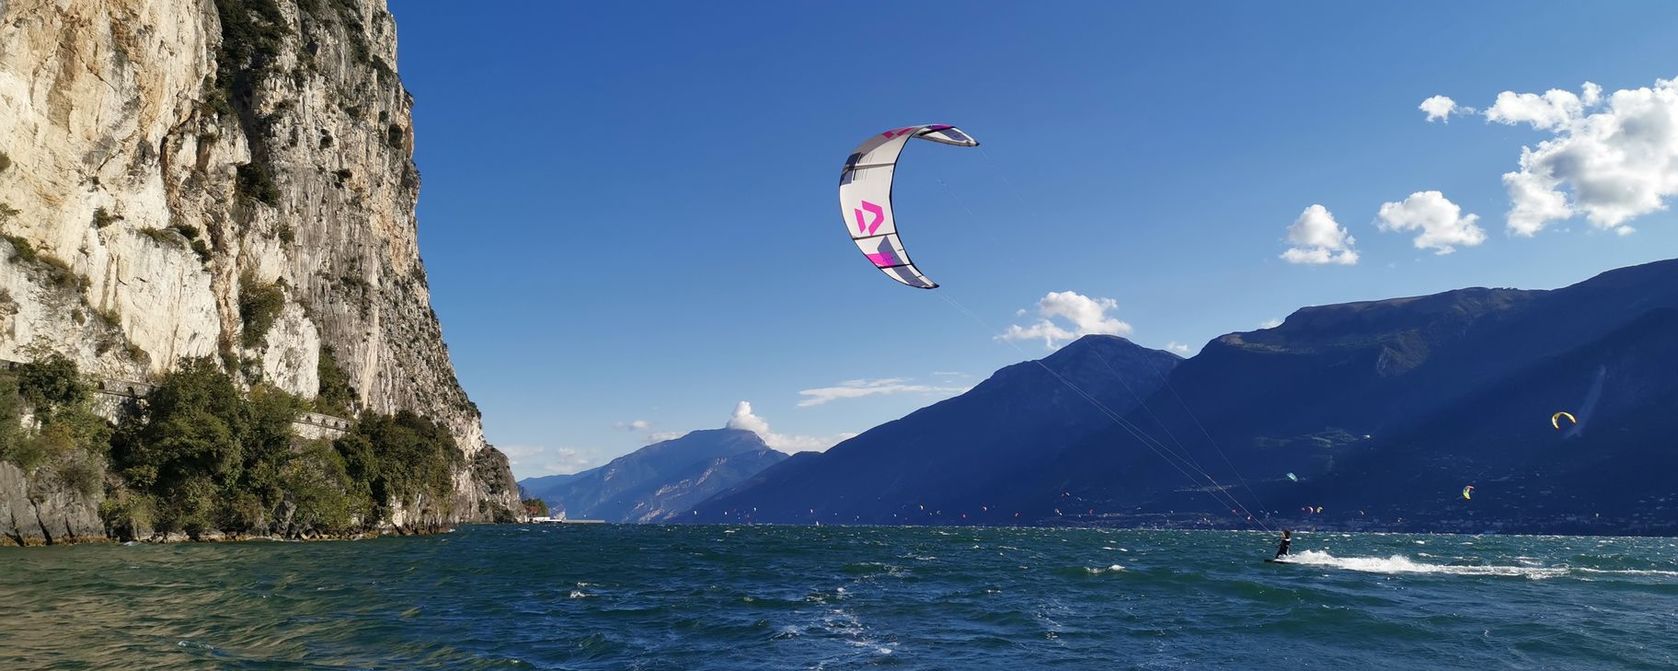 Kiteschool Lake Garda Italy